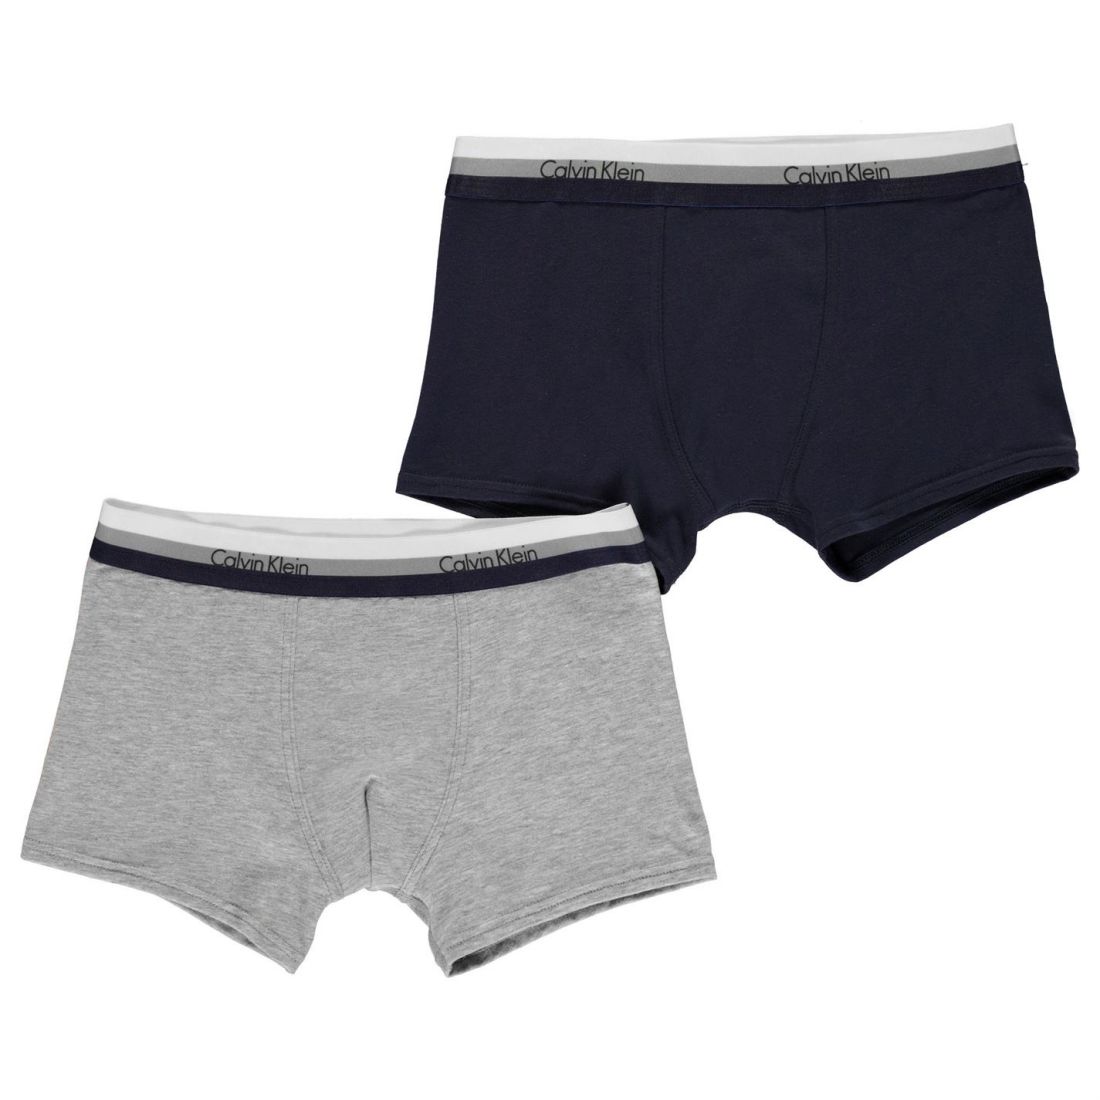 Kids Calvin Klein Underwear Triple Stripe 2 Pack Trunks Boxer New | eBay